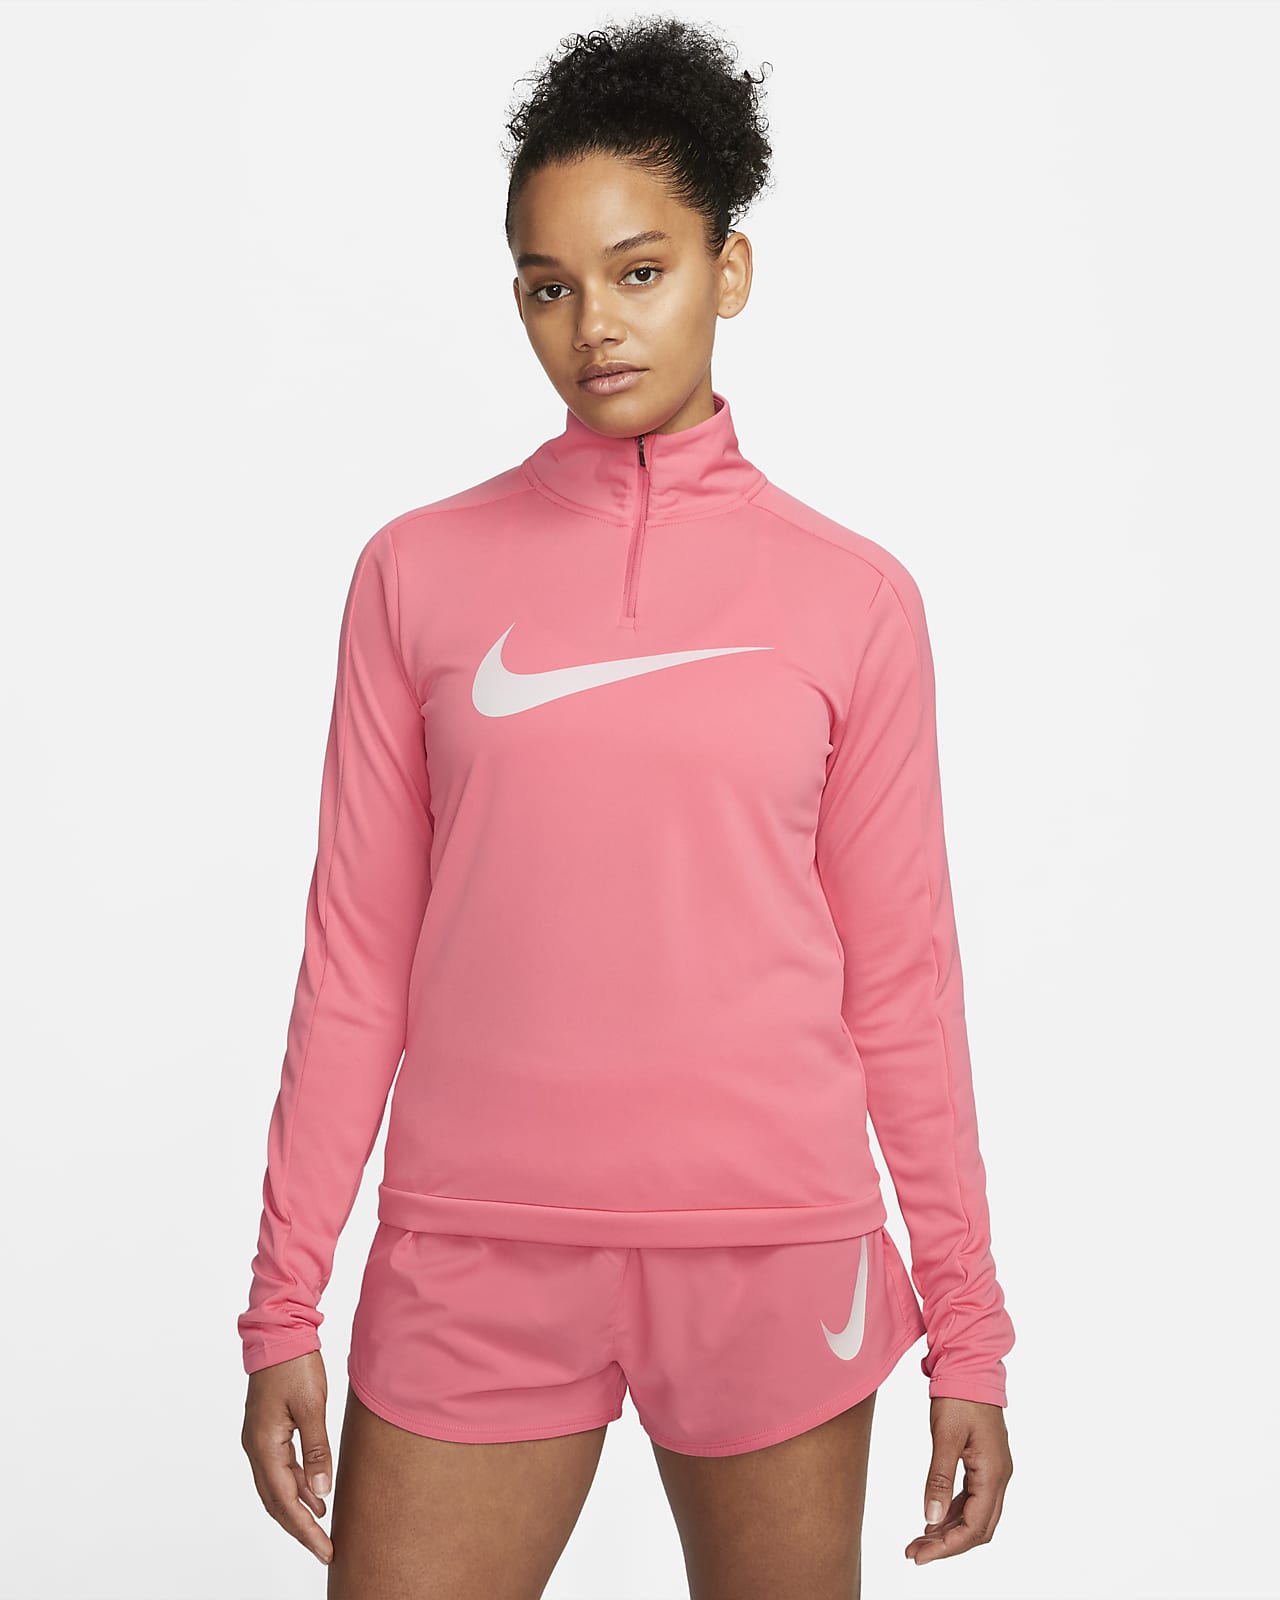 Nike Dri-FIT Swoosh Women's 1/4-Zip Long-Sleeve Running Mid Layer